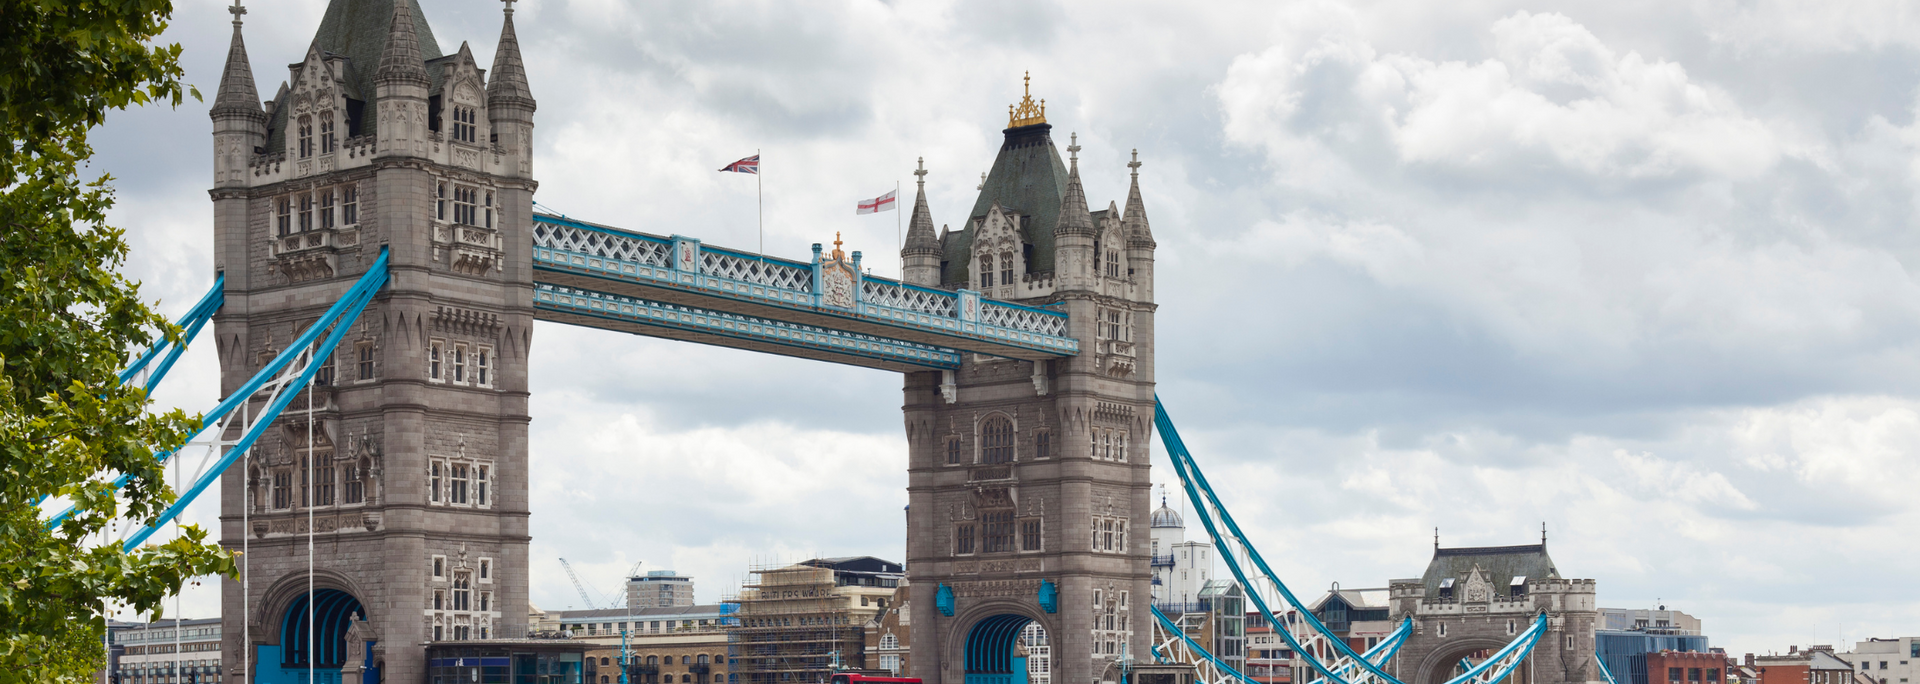 Picture of Tower Bridge, London